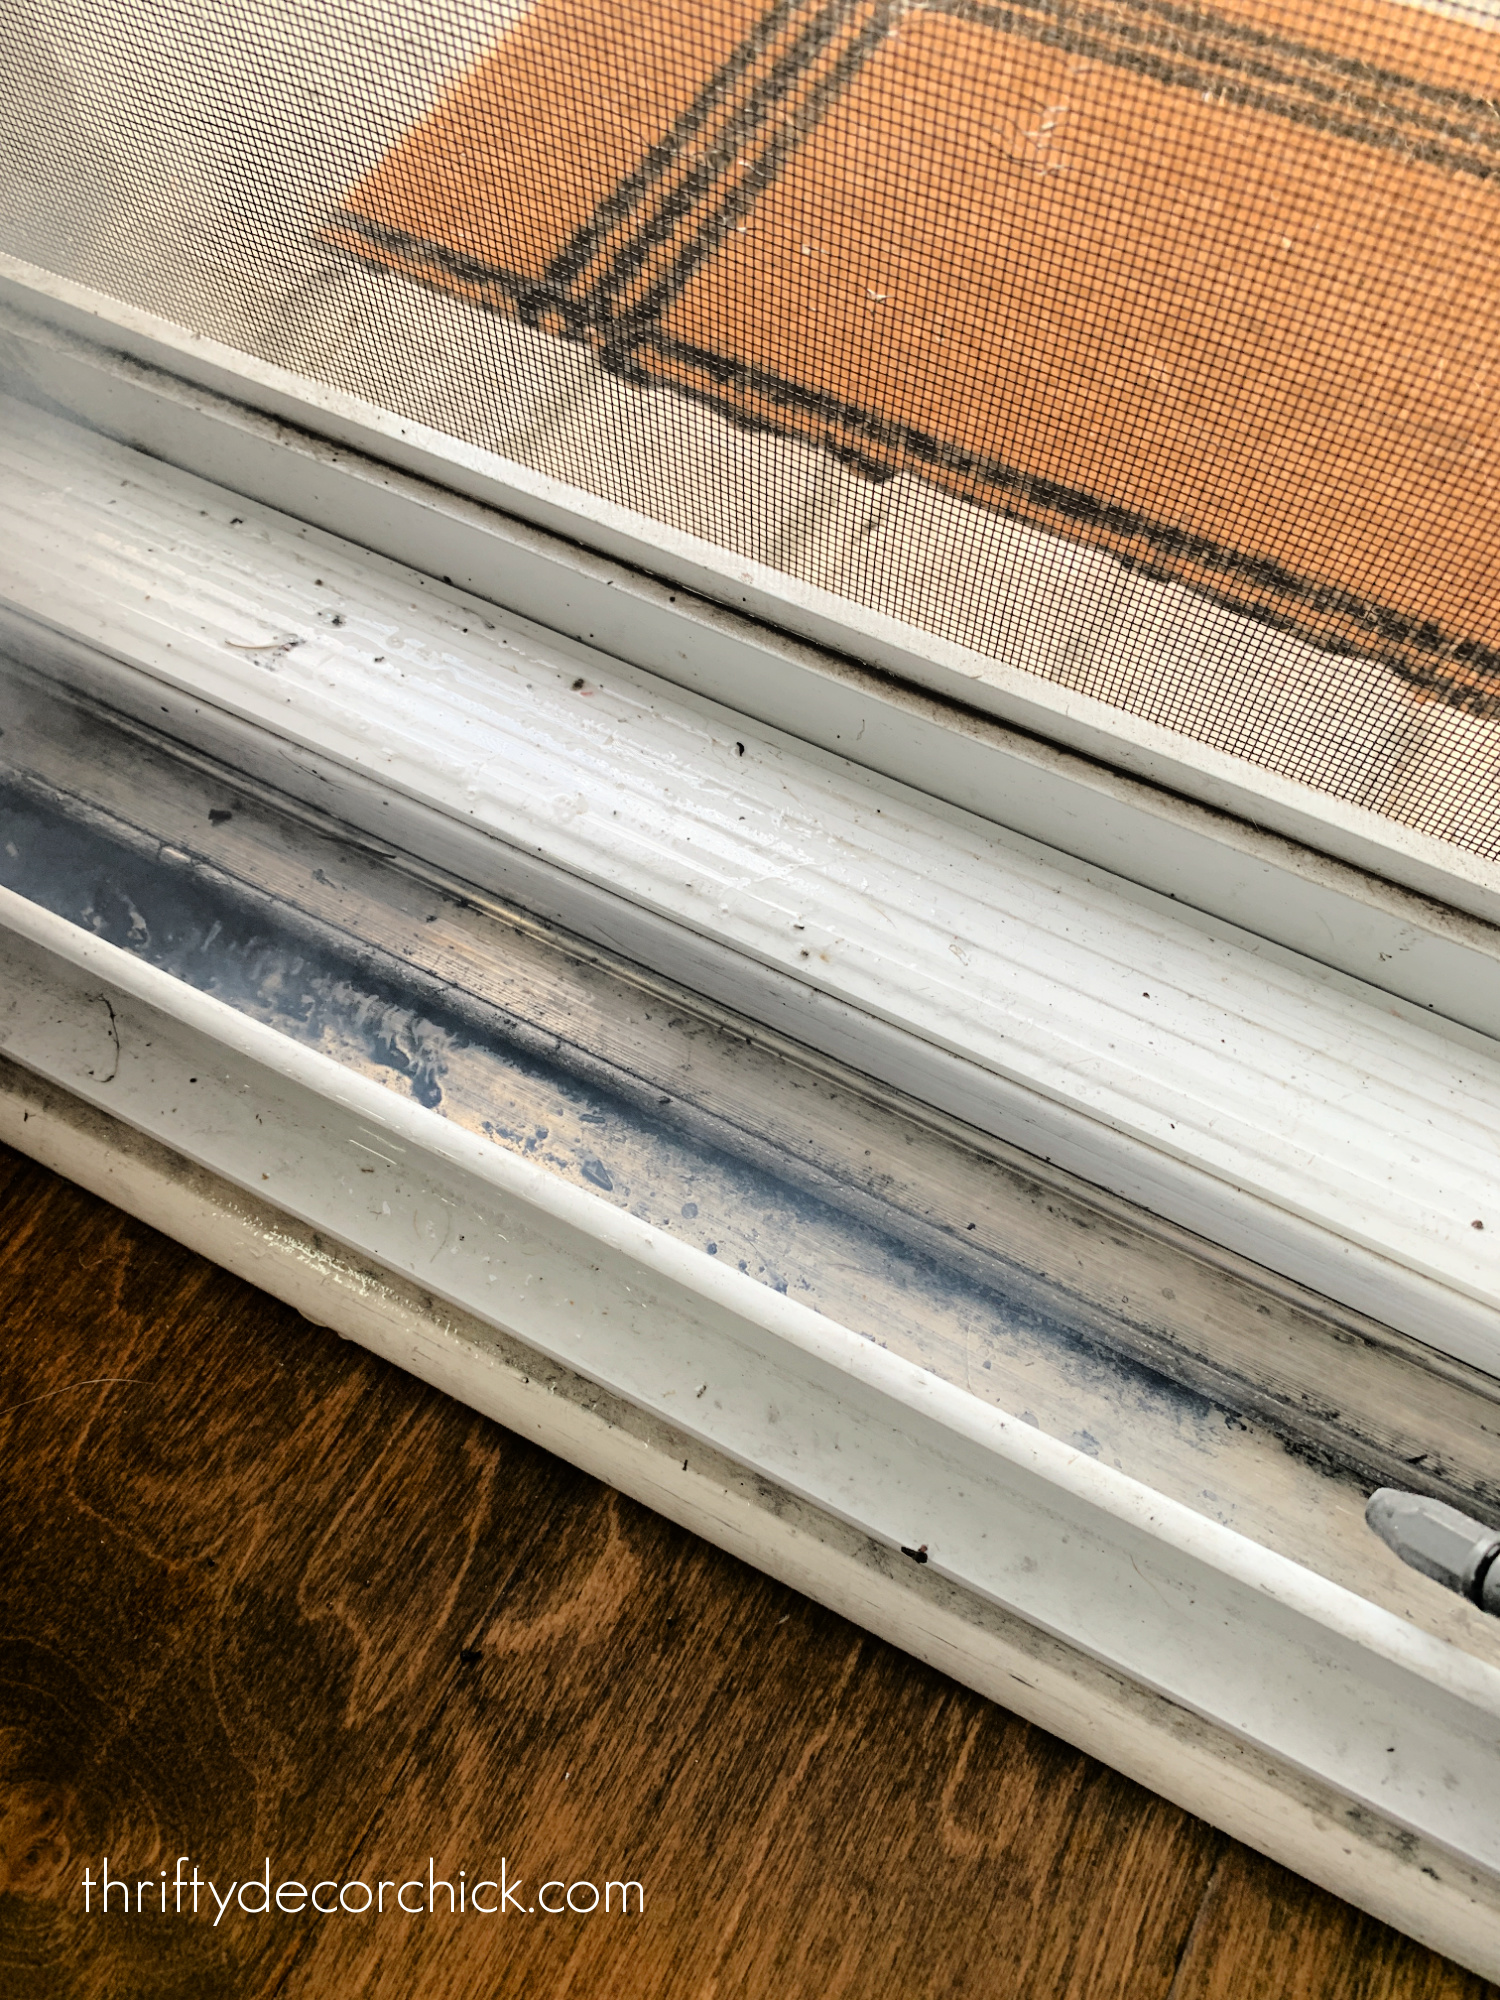 HOW TO PROFESSIONALLY CLEAN WINDOW & DOOR TRACKS 